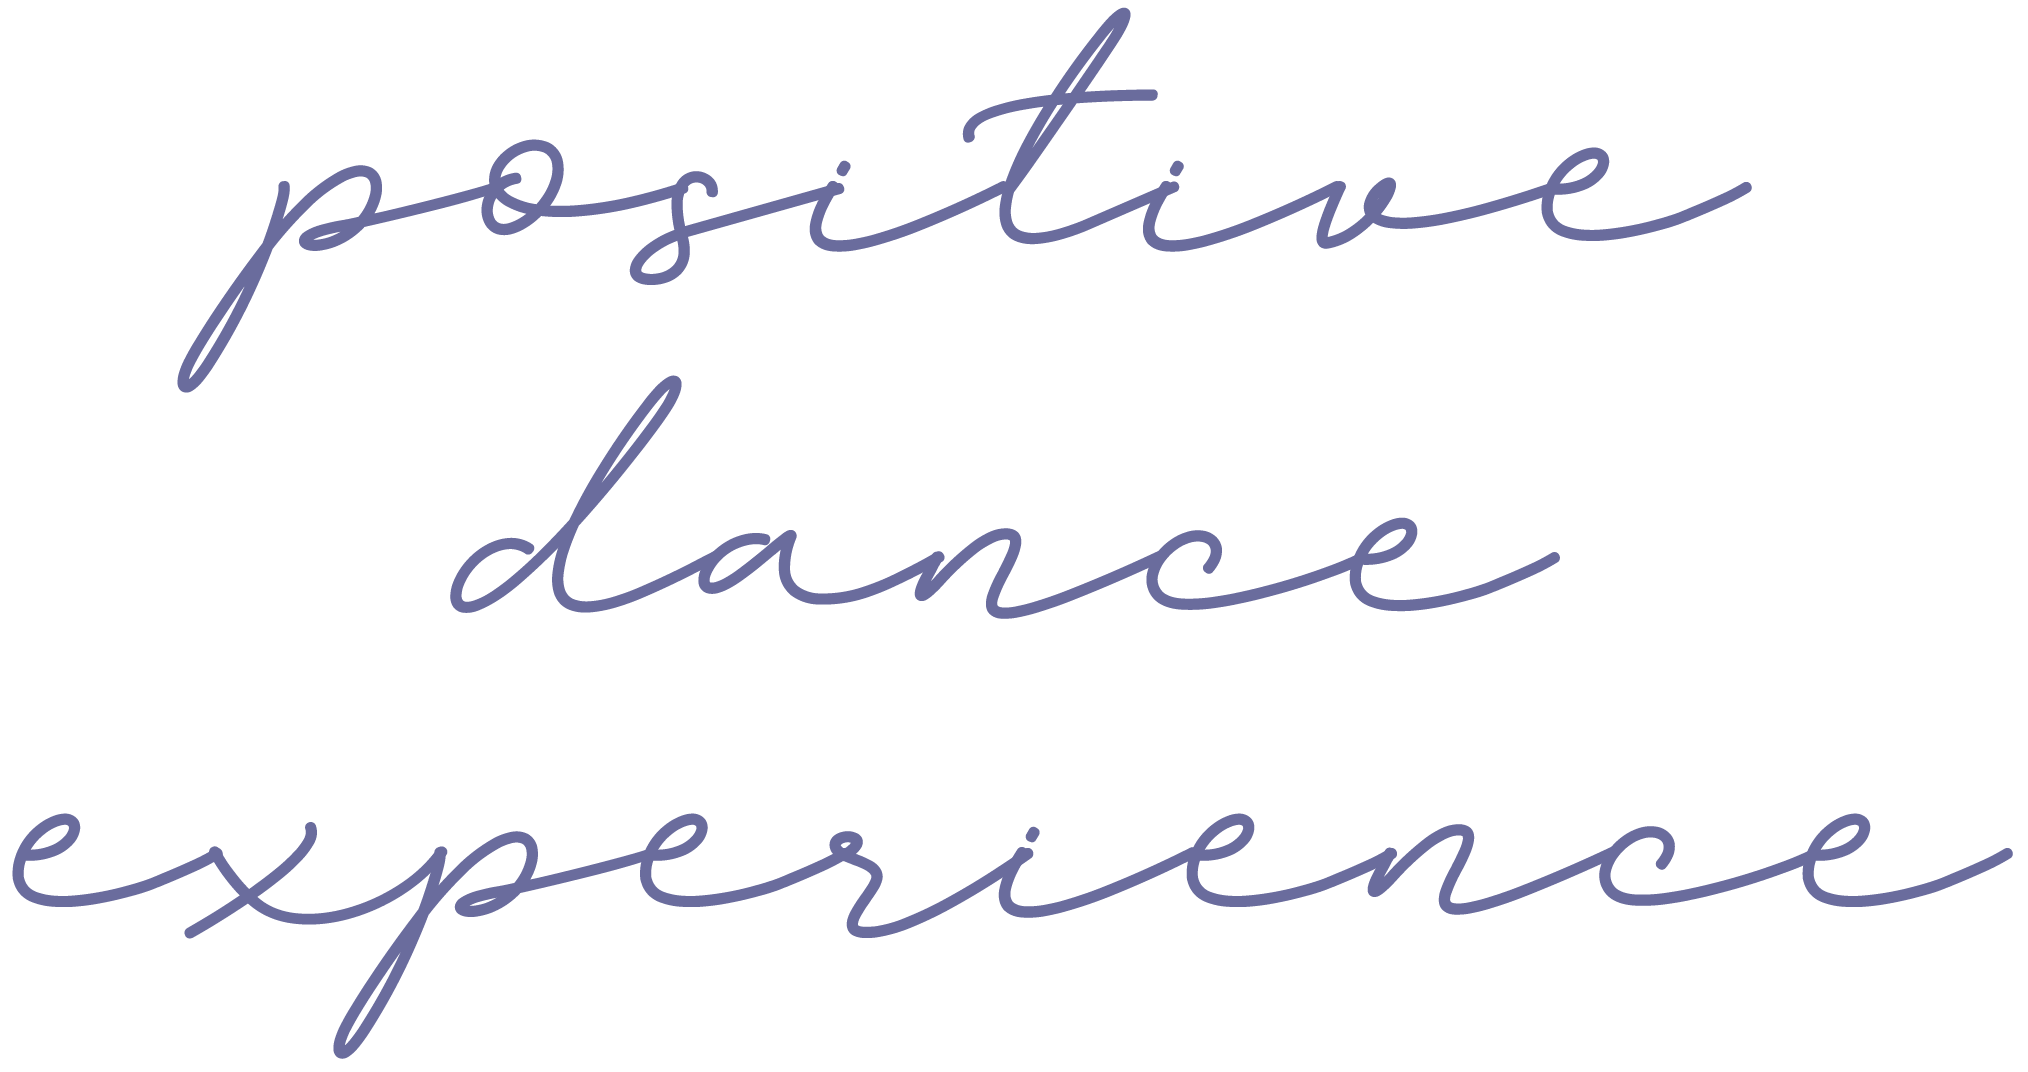 Positive Dance Experience